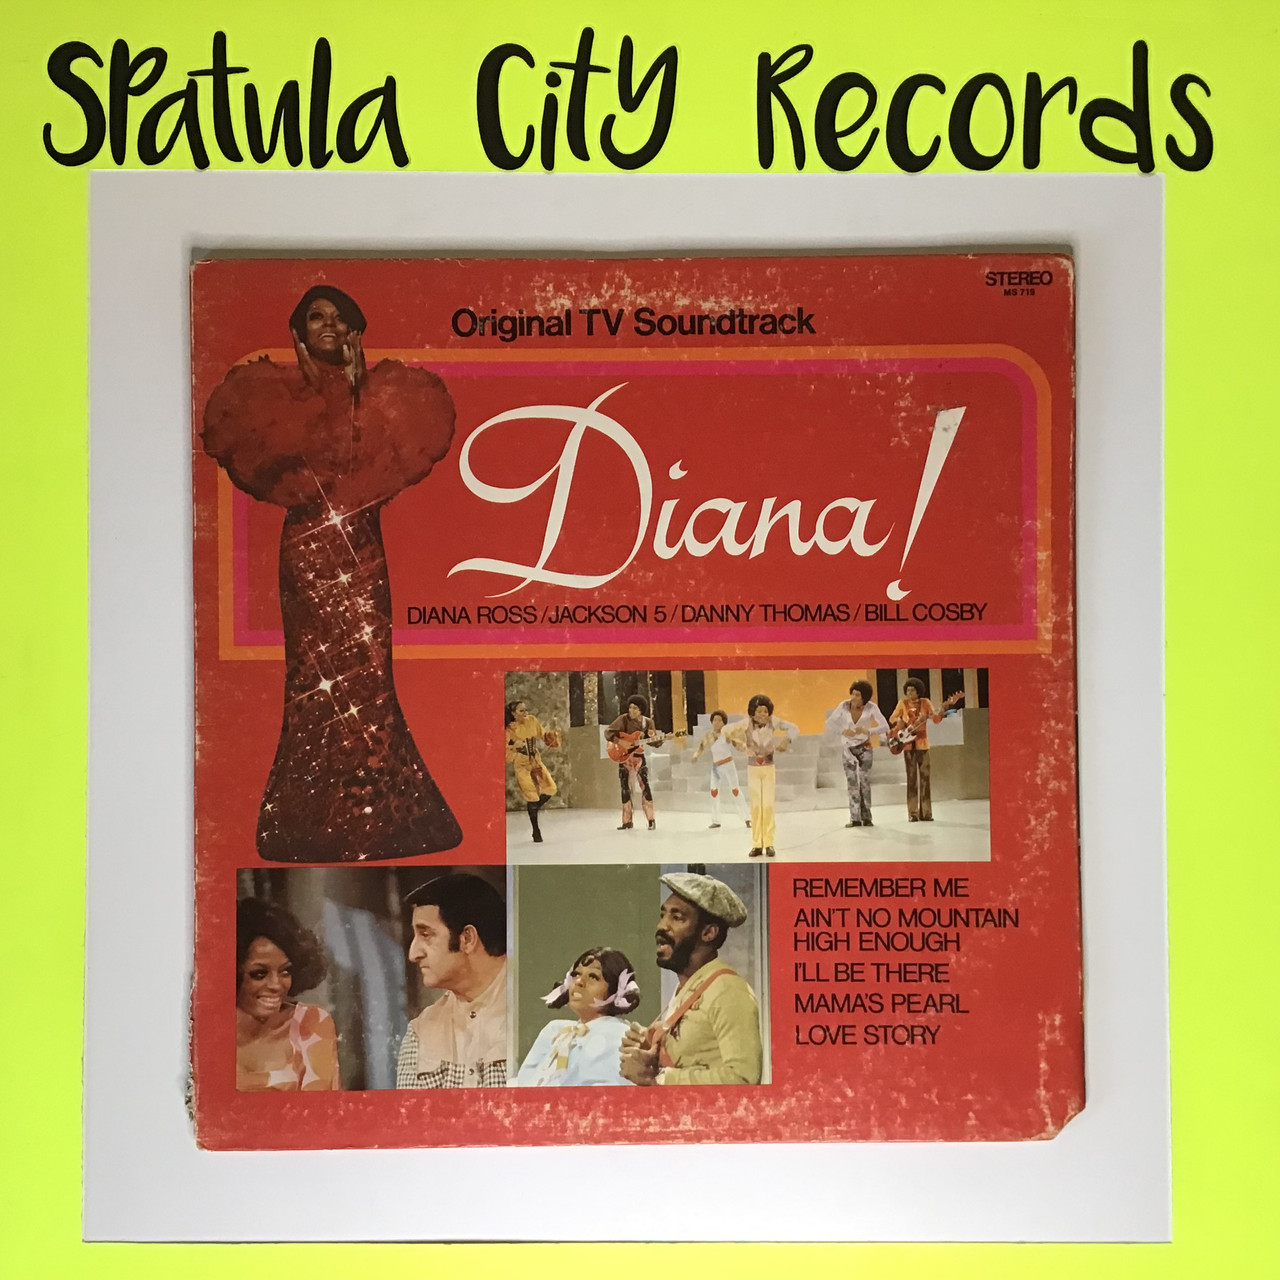 Diana Ross - Diana - Original TV Soundtrack - vinyl record album LP